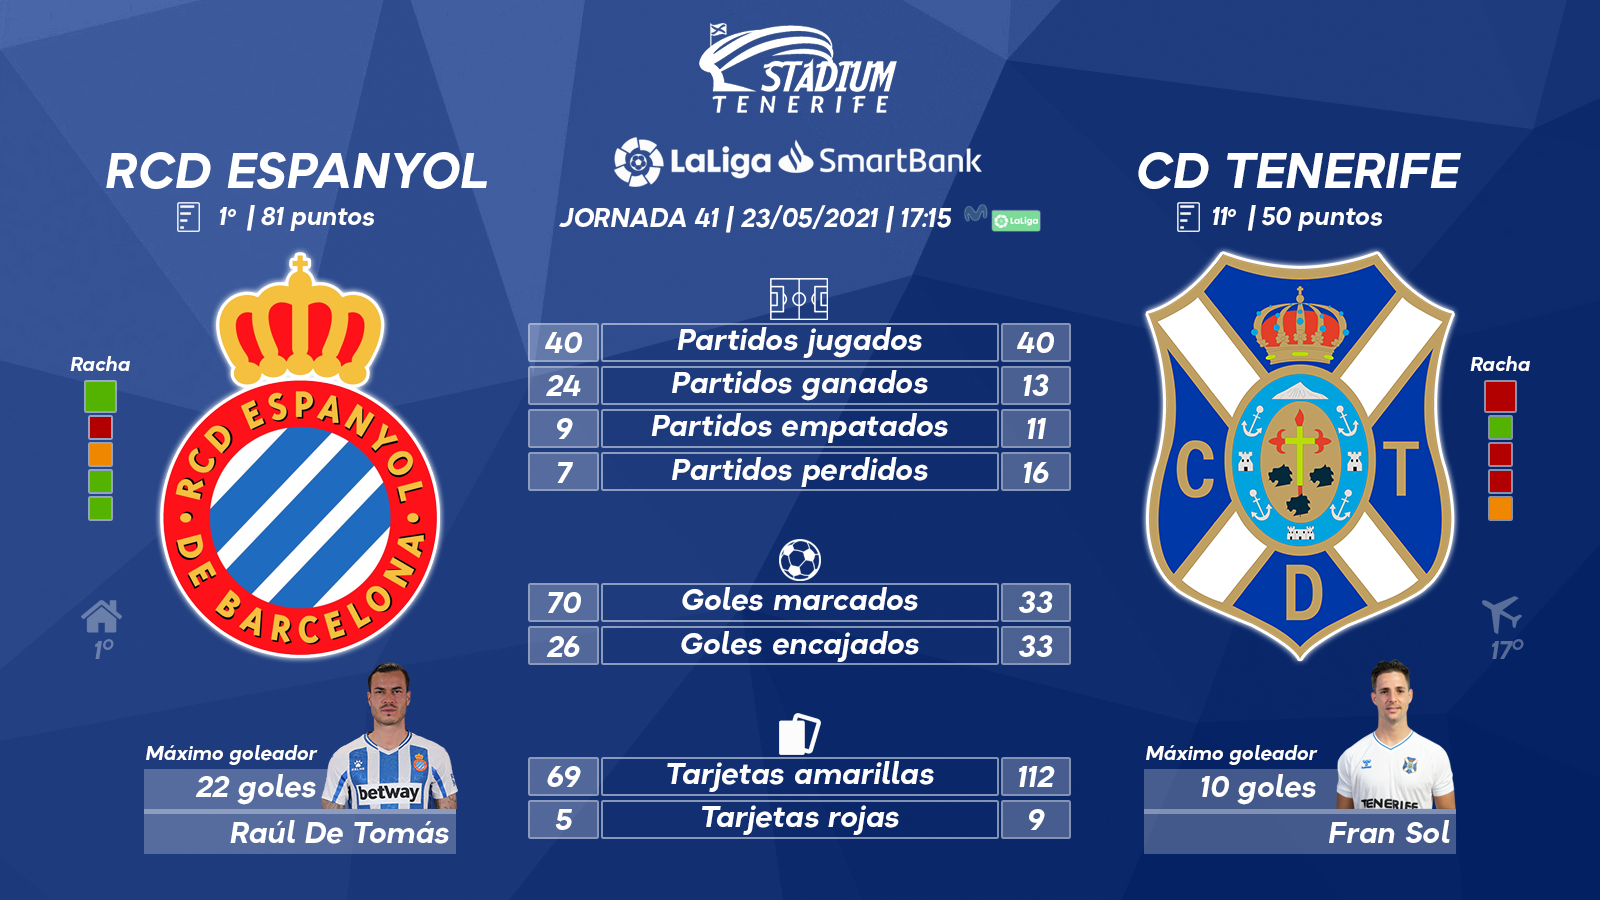 Previa del RCD Espanyol-CD Tenerife (41ª J. – LaLiga SmartBank)